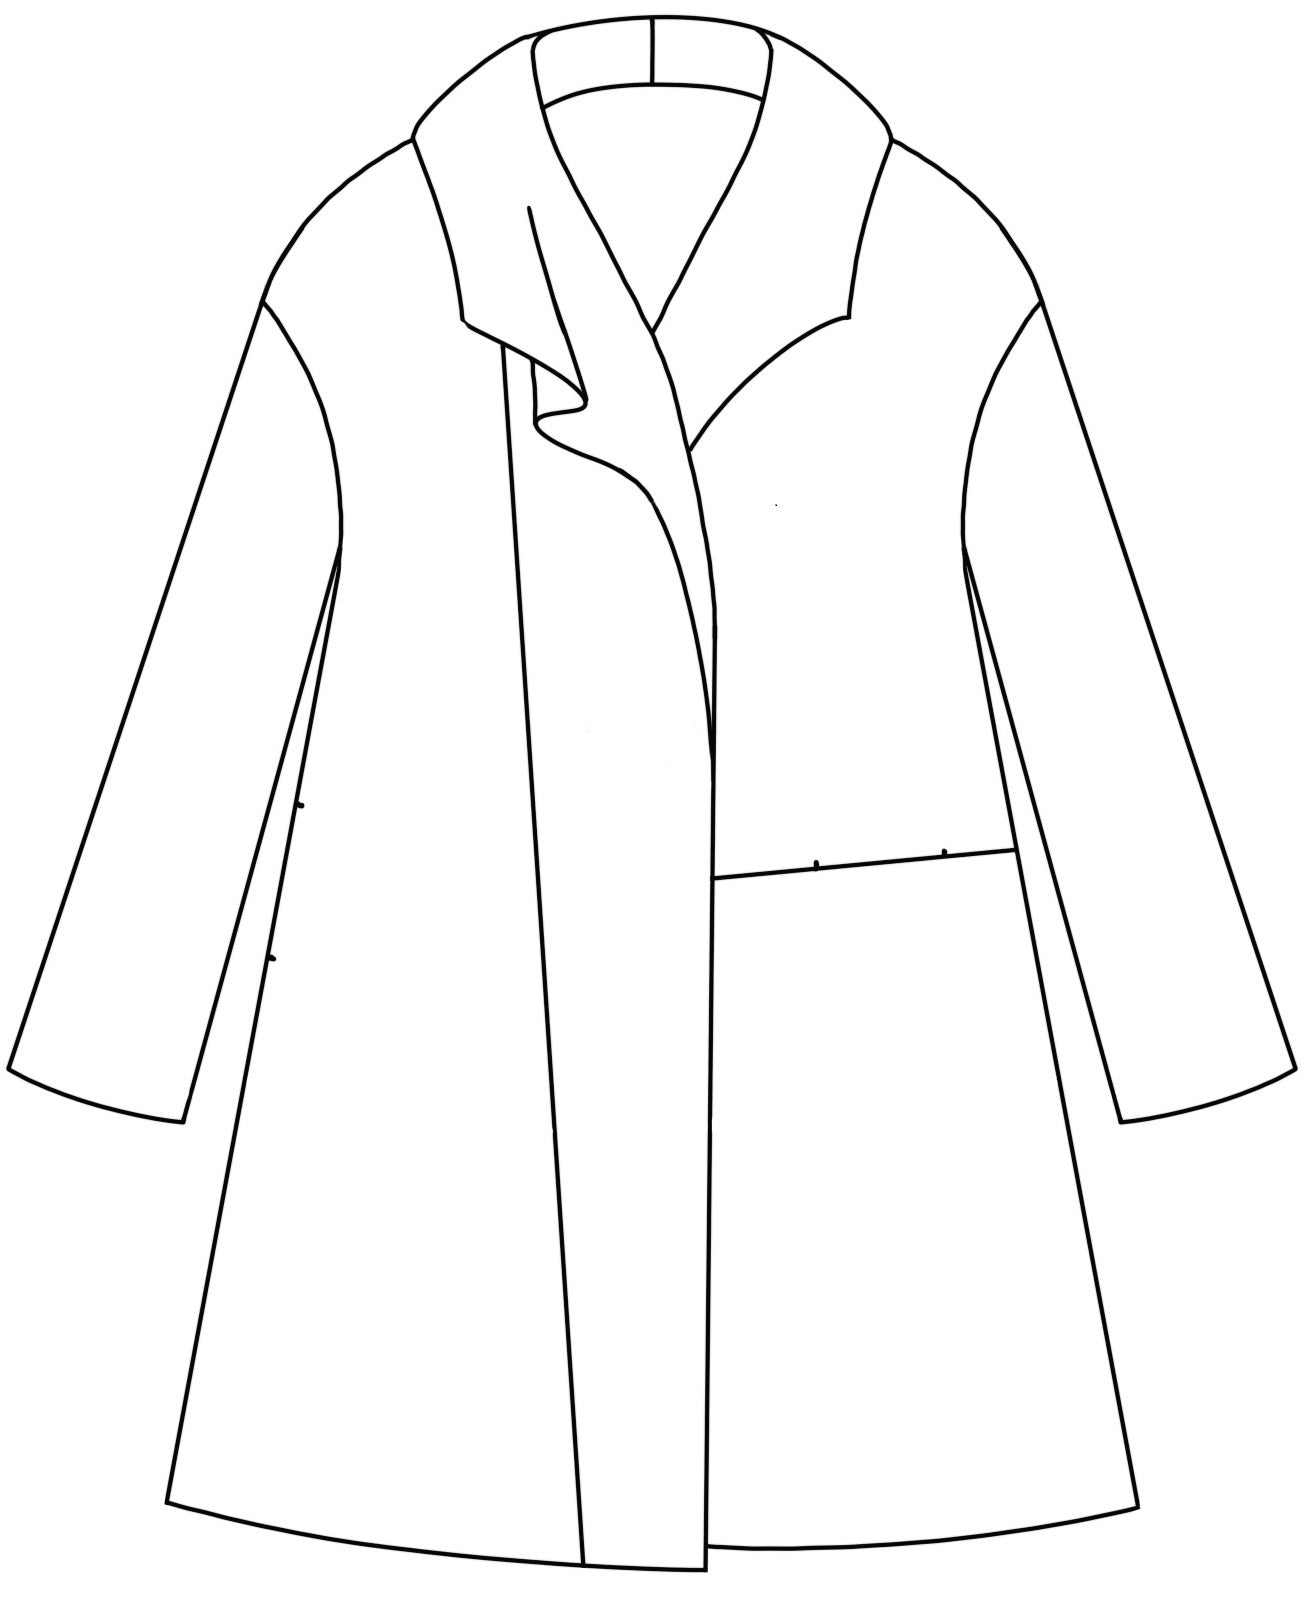 drawing of an asymmetrical coat